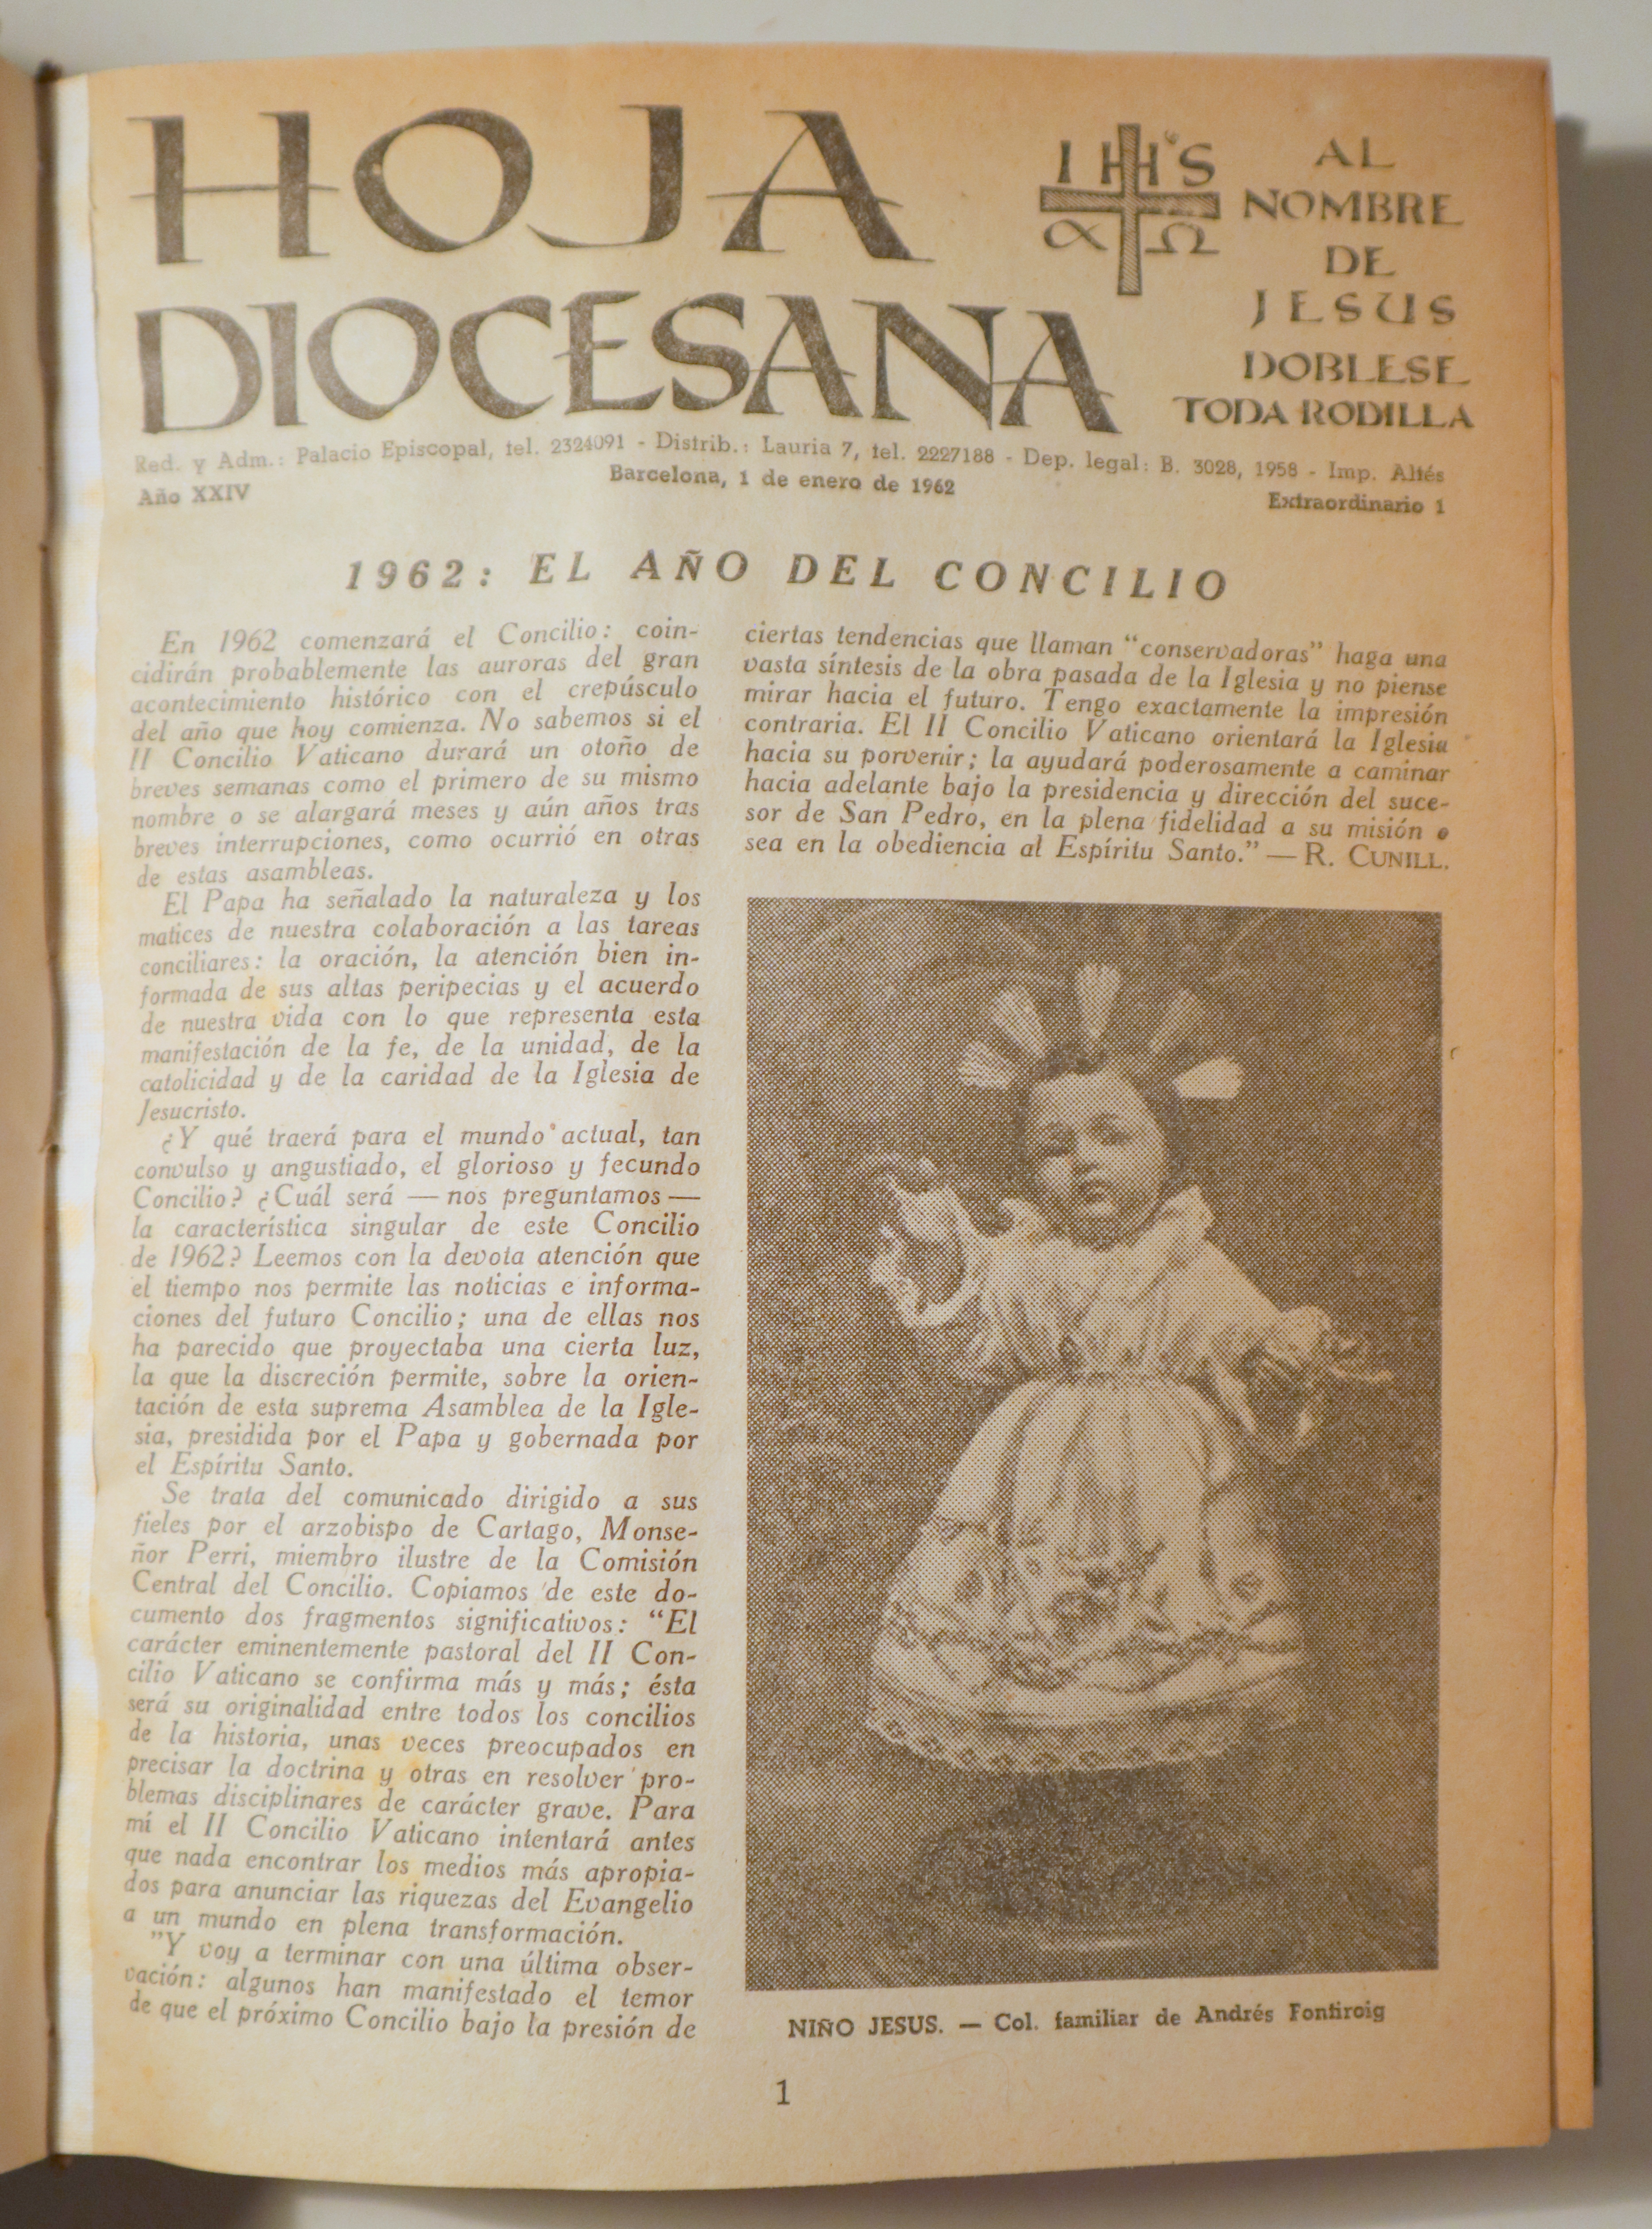 HOJA DIOCESANA 1962 - Barcelona 1962 - Muy ilustrado